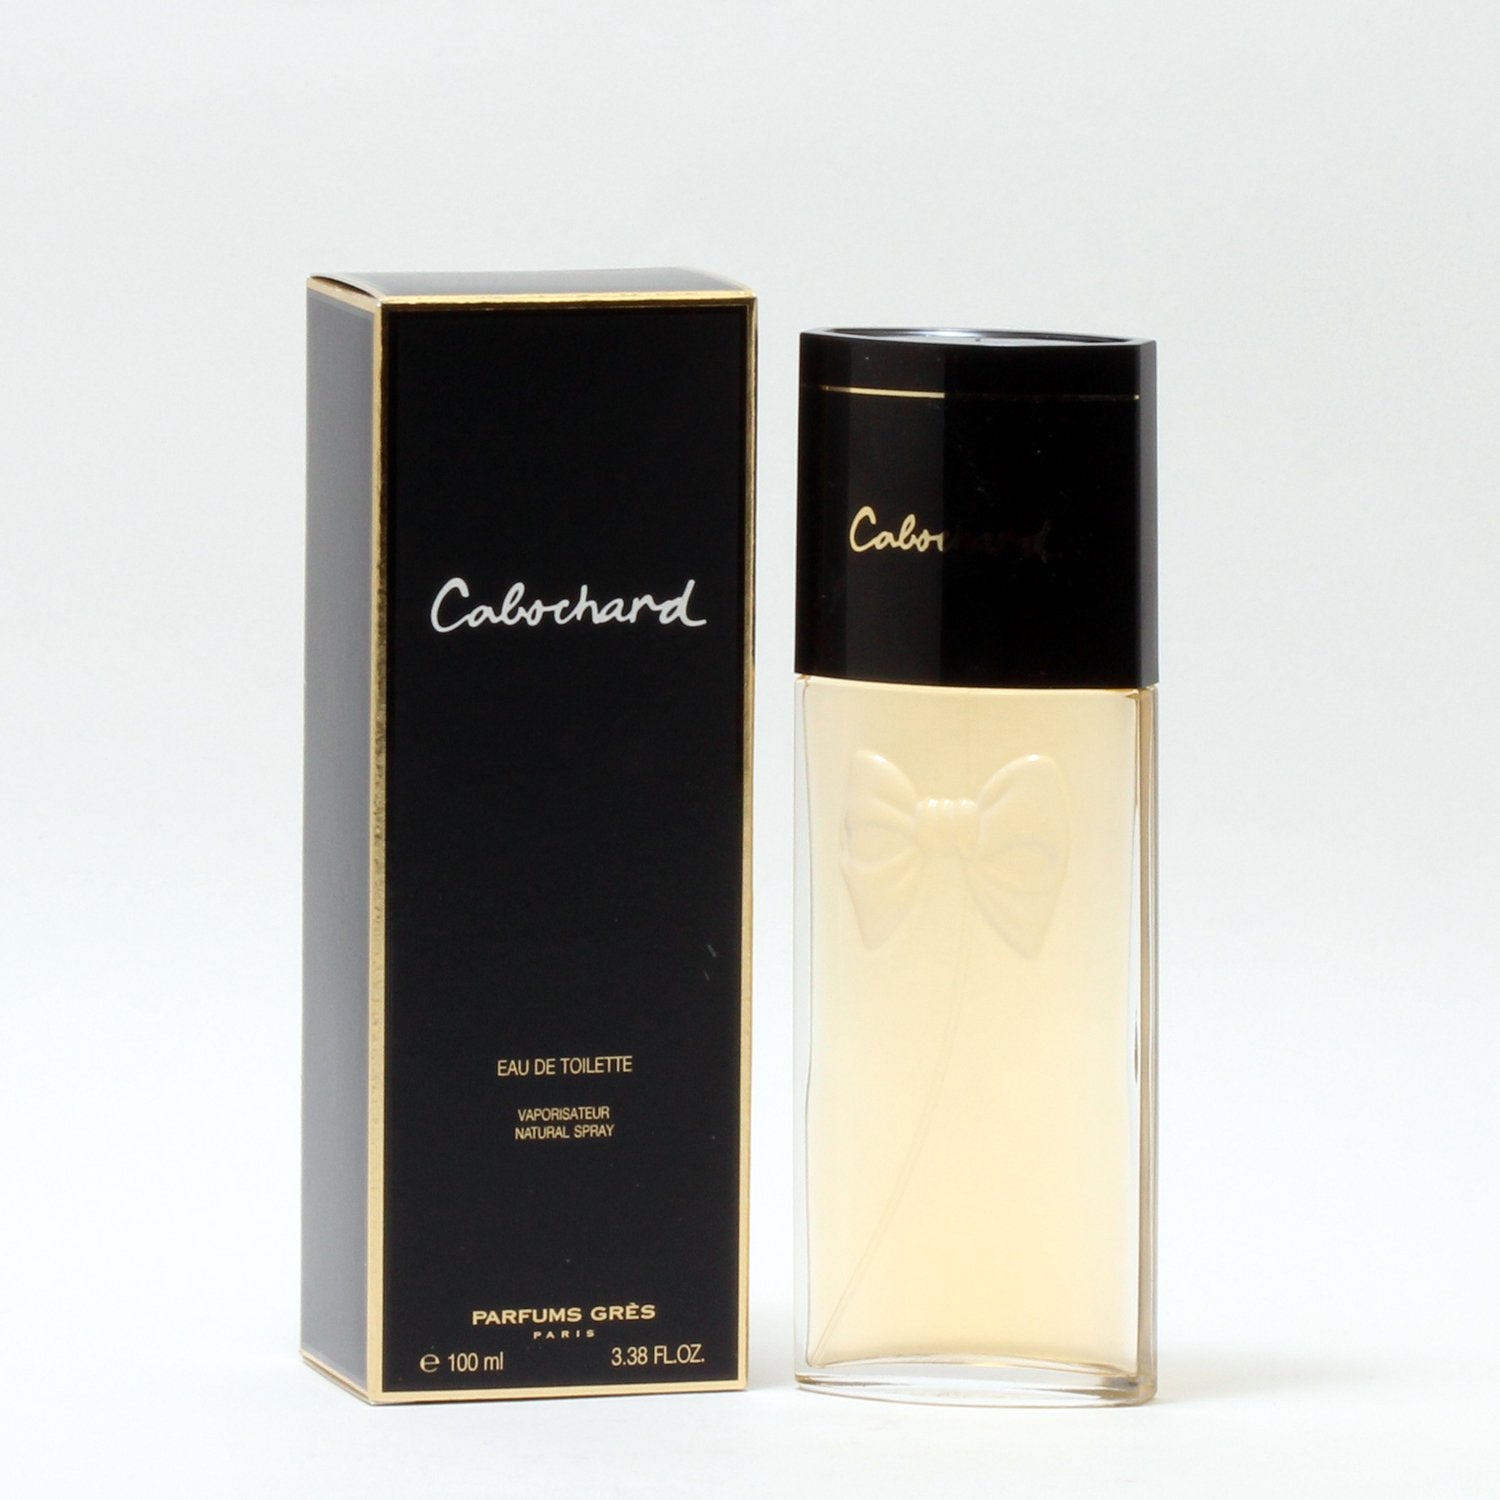 Perfume - CABOCHARD FOR WOMEN BY PARFUMS GRES - EAU DE TOILETTE SPRAY, 3.4 OZ